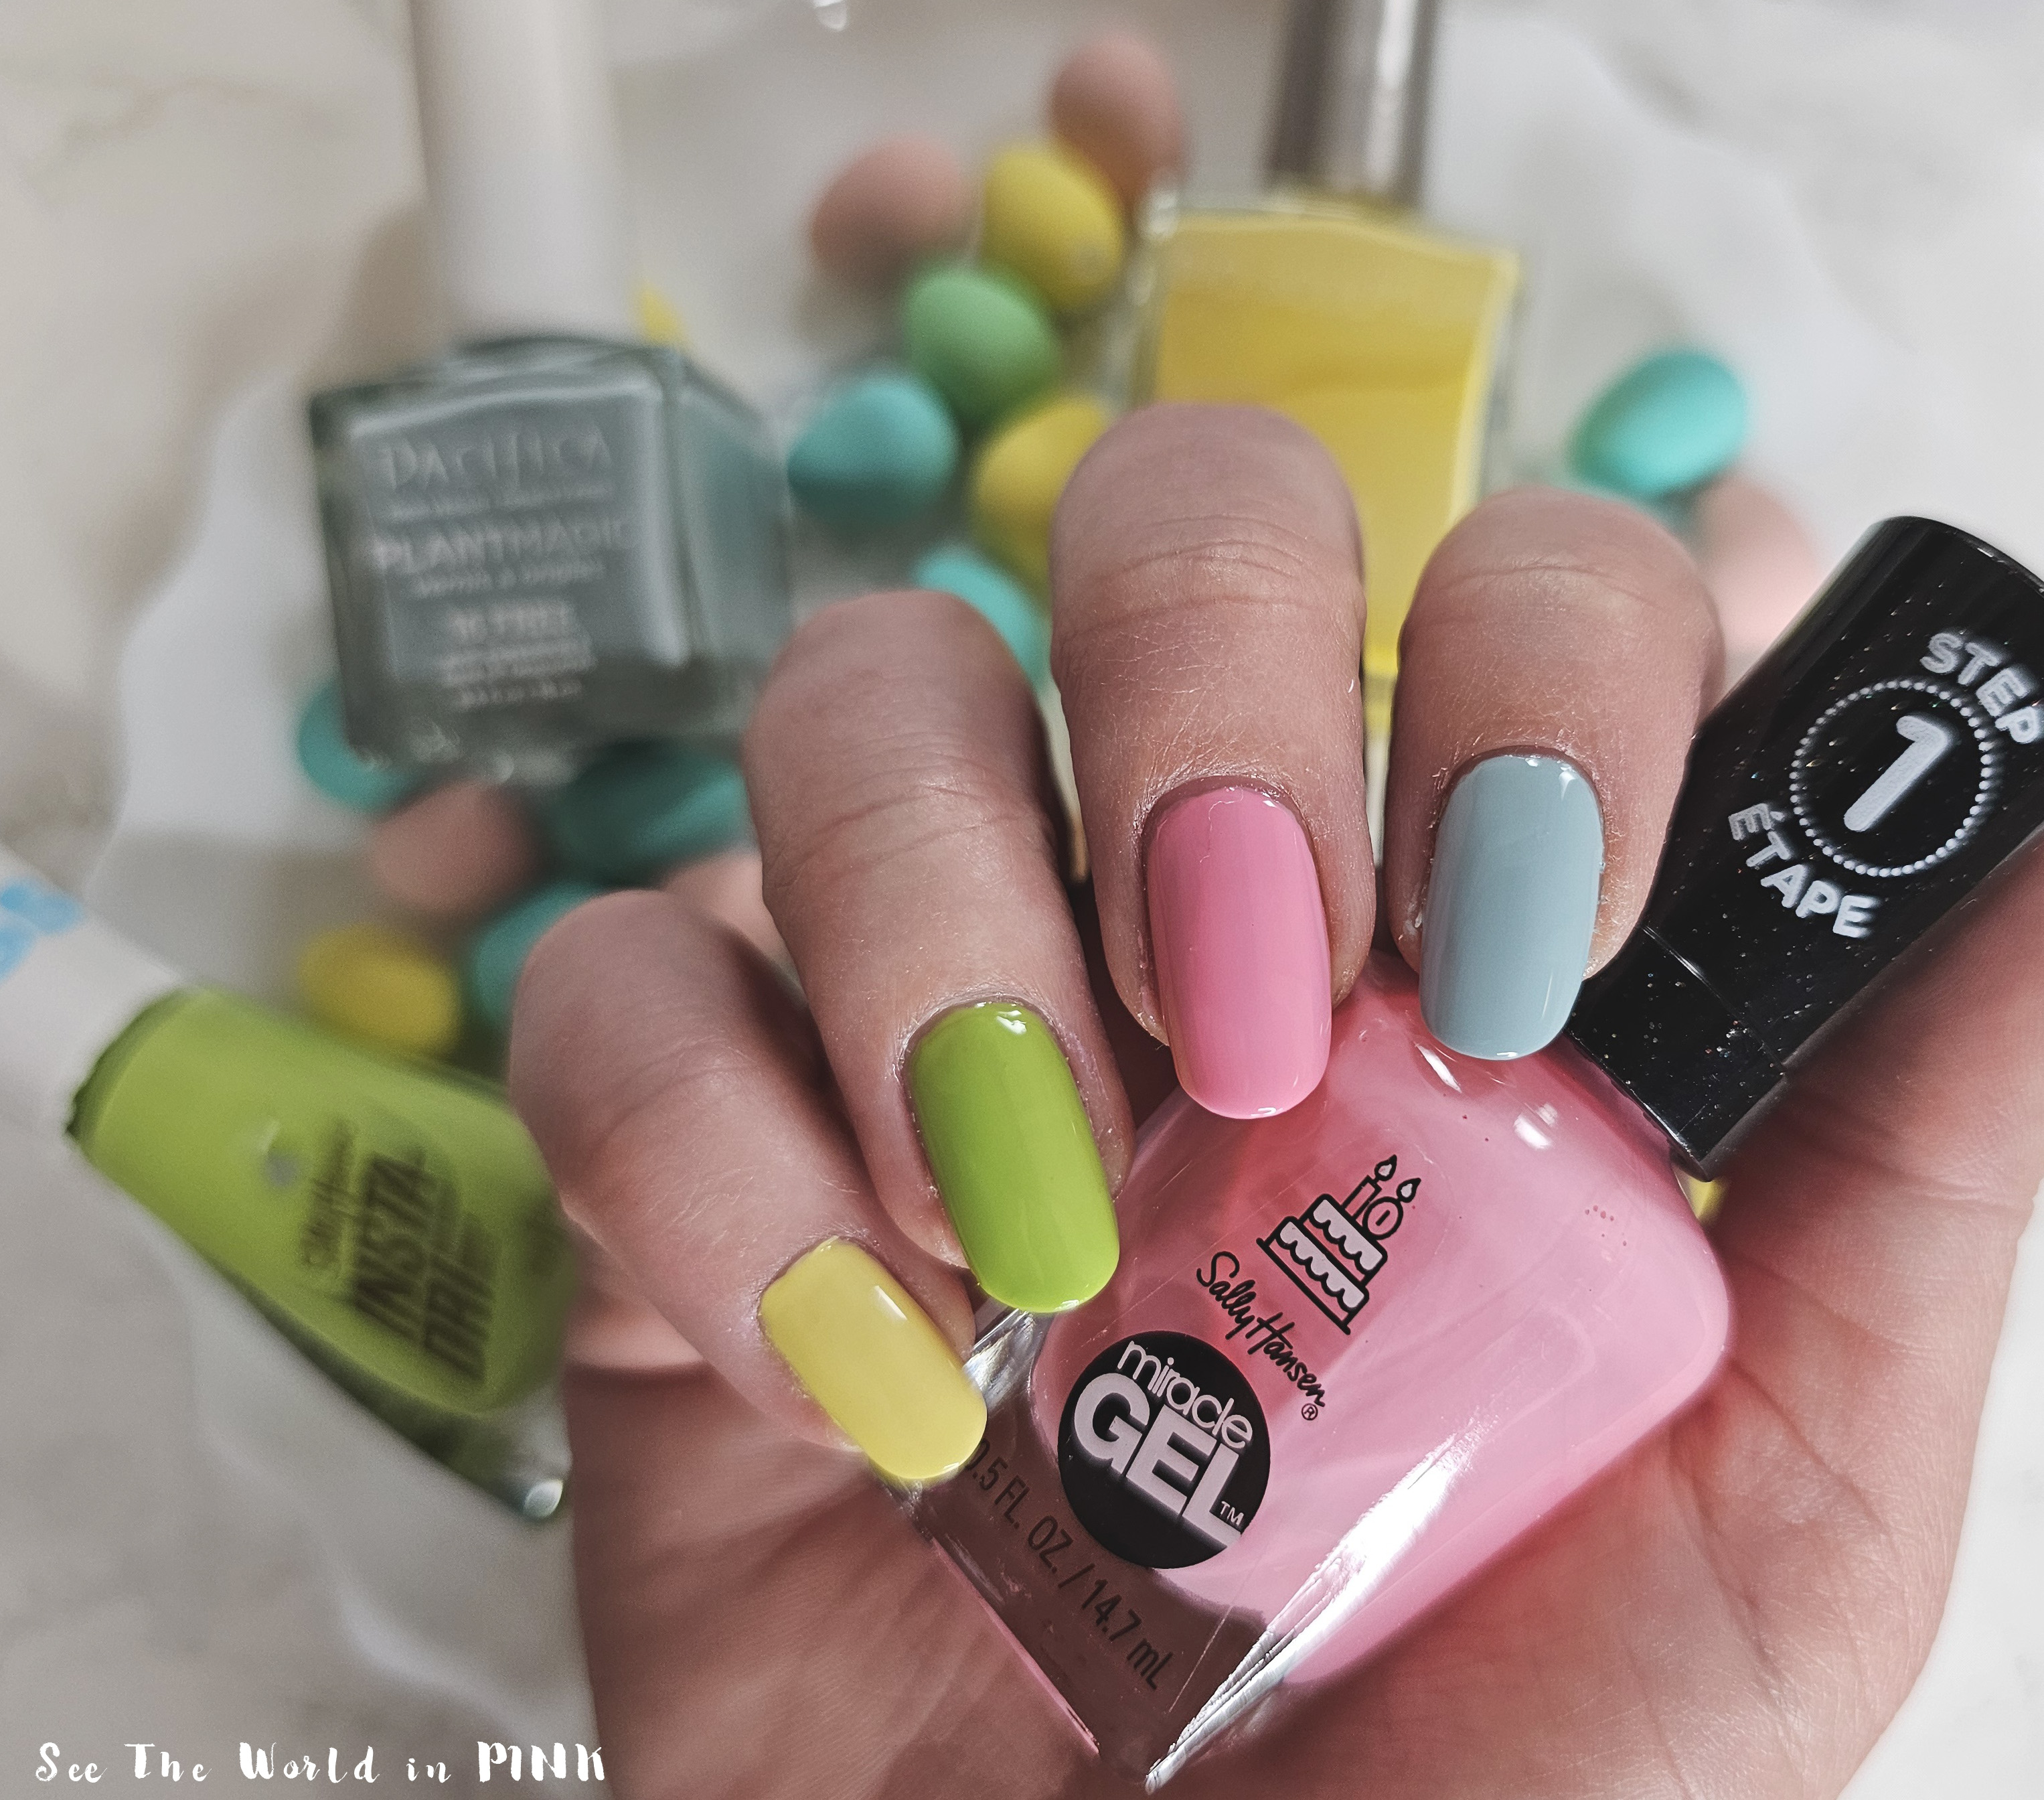 Manicure Tuesday - Easter Mini Egg Nails